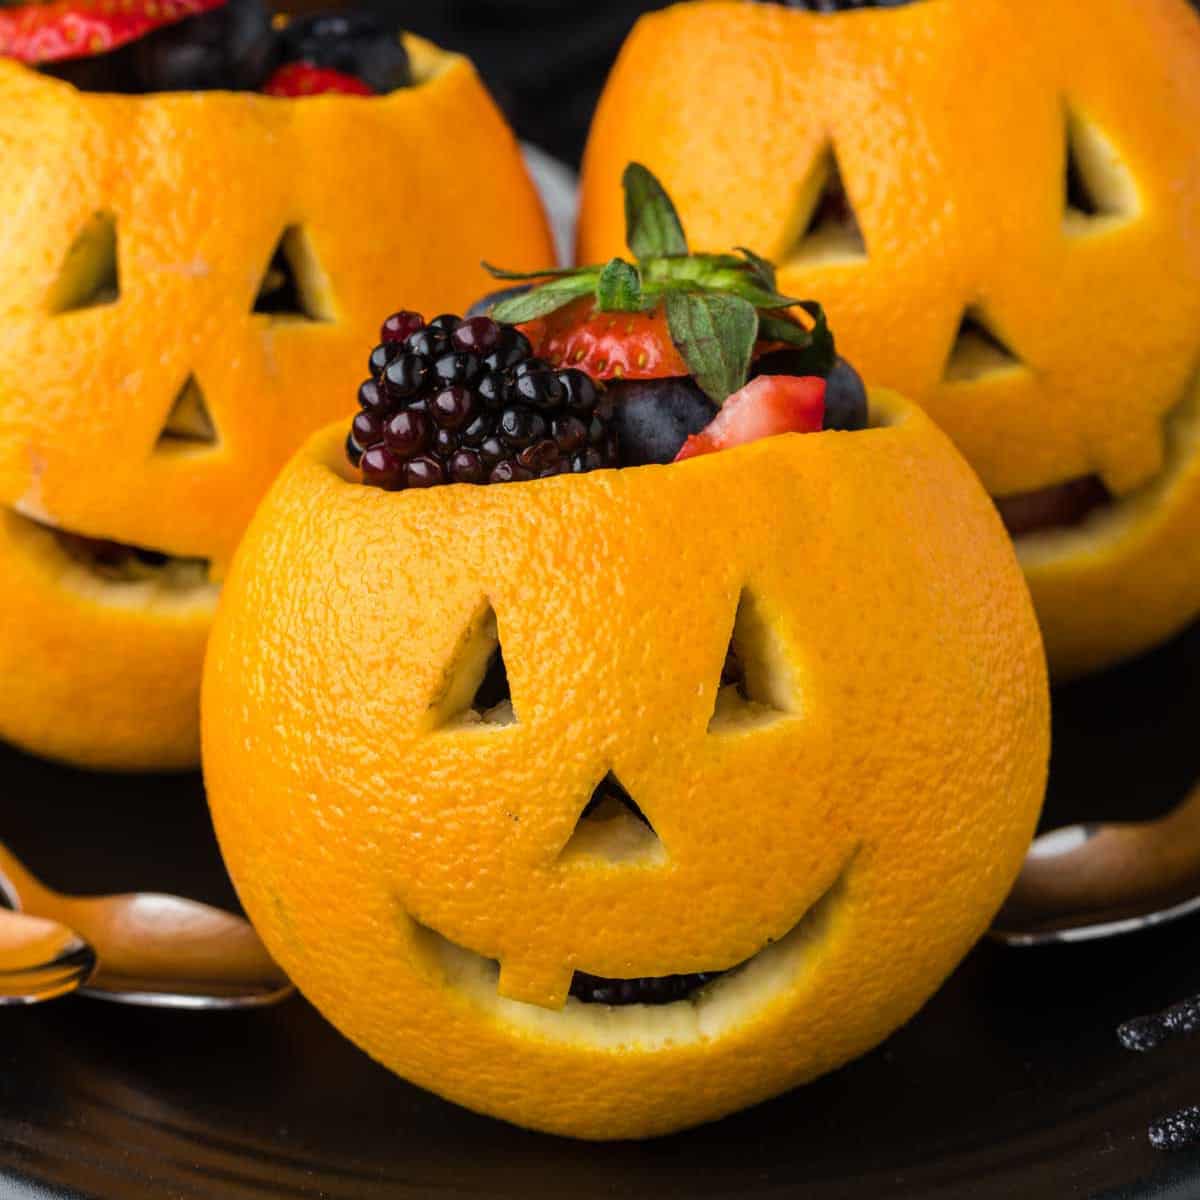 Halloween Fruit Cups Your Preschooler Can Make - Eating Richly